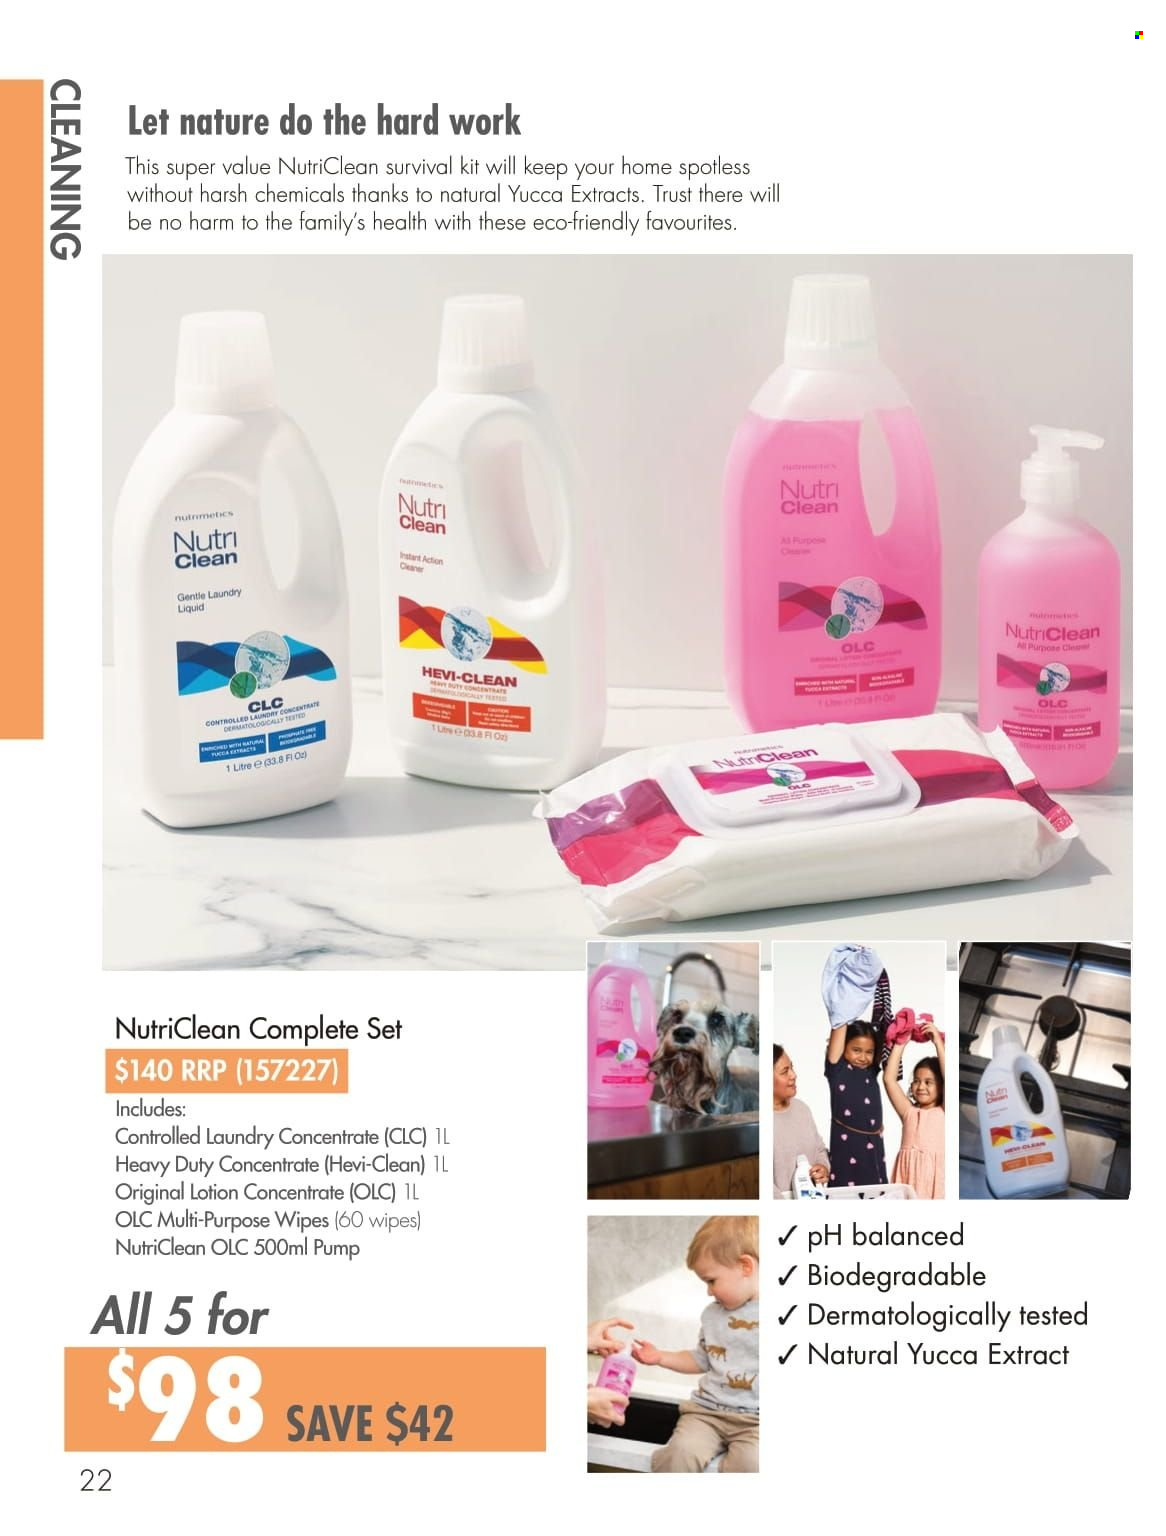 thumbnail - Nutrimetics Catalogue - 1 Apr 2022 - 15 Jul 2022 - Sales products - wipes, laundry detergent, body lotion, Trust. Page 22.